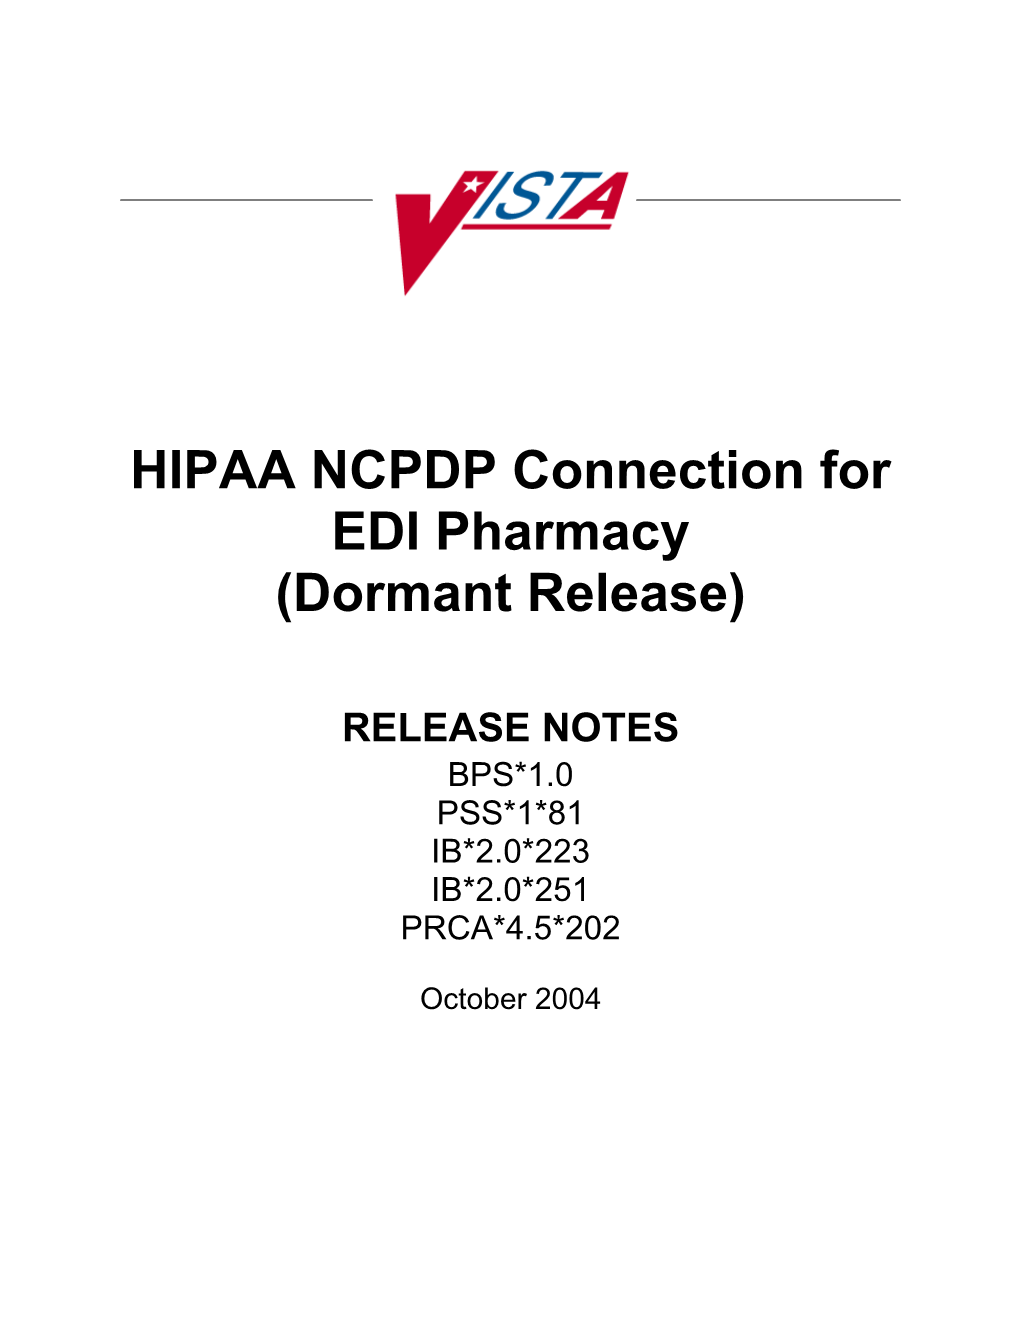 HIPAA NCPDP Connection for EDI Pharmacy